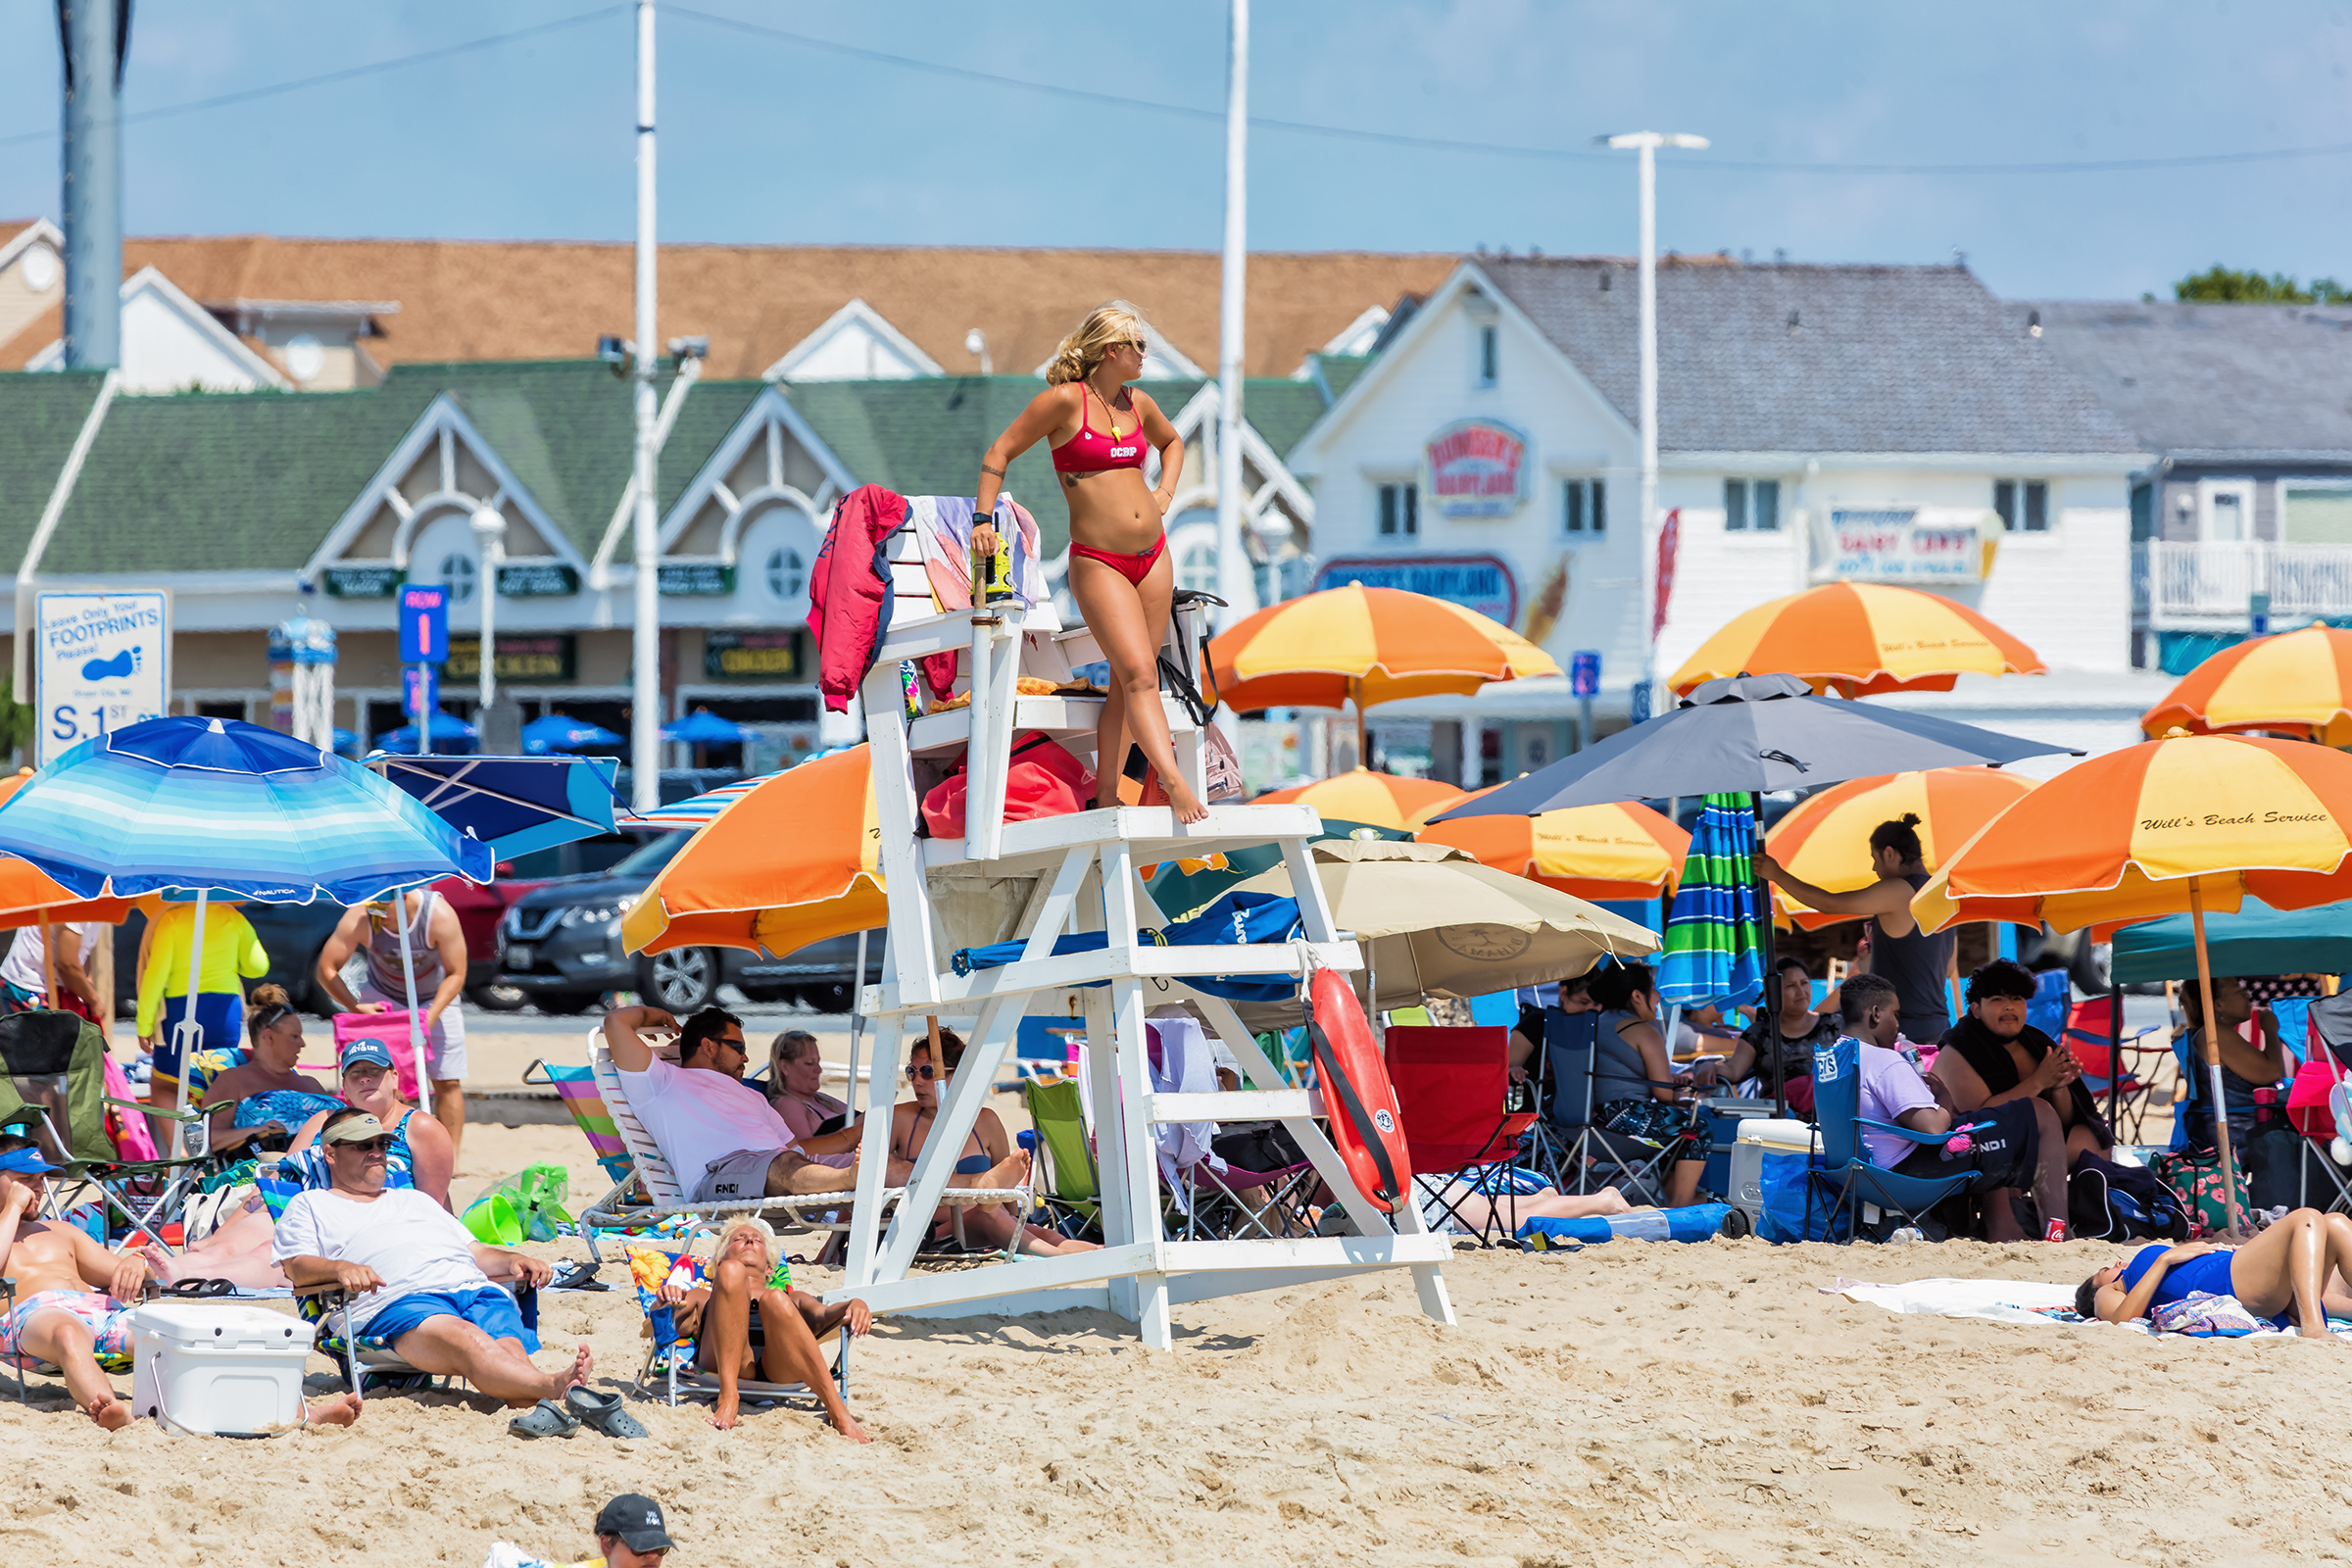 Shortage of lifeguards sparks debate over incentive scheme